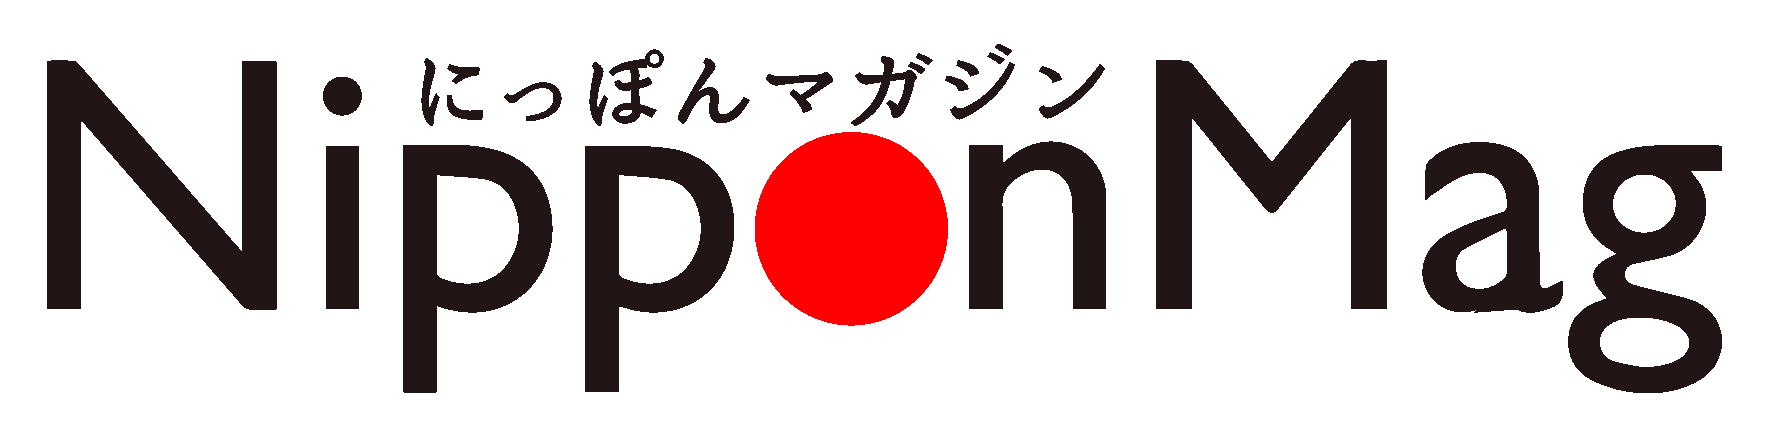 NipponMag